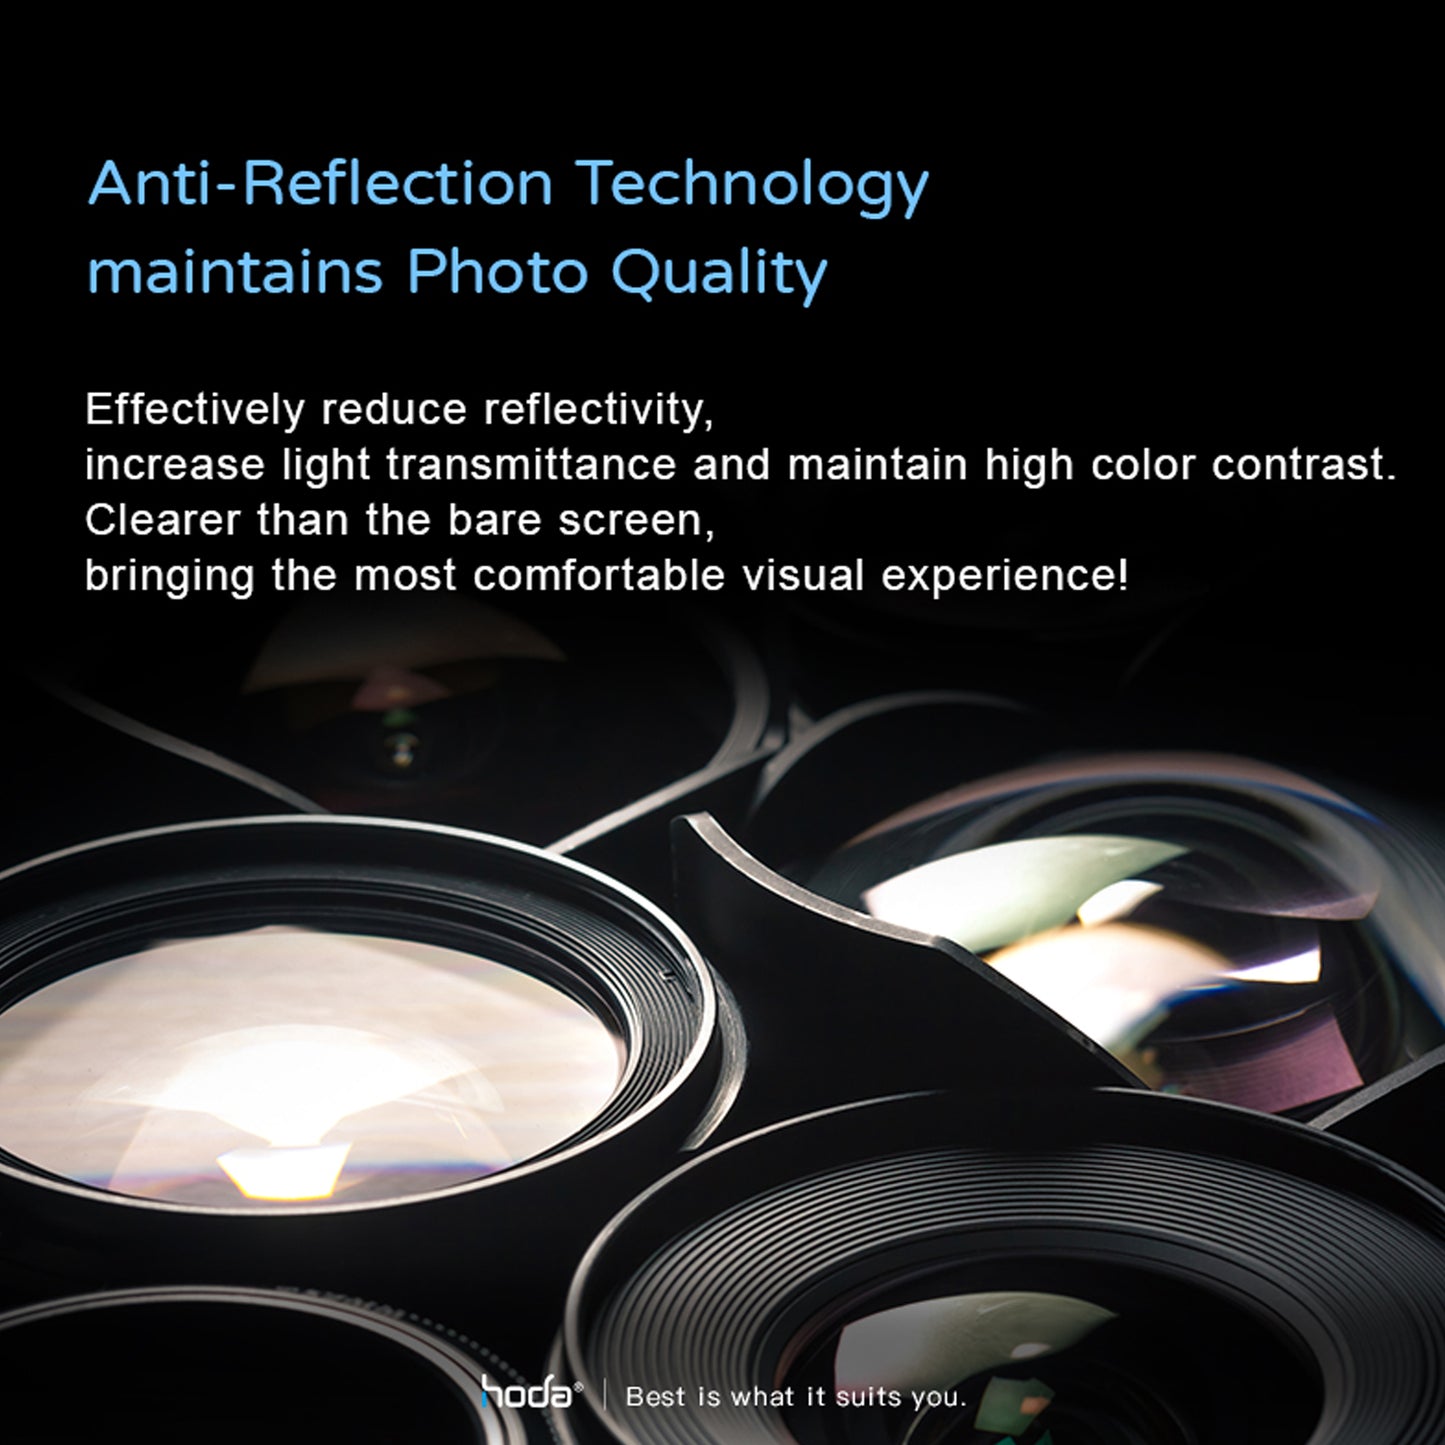 Hoda Sapphire Lens Protector for iPhone 13 Mini - 13 - Midnight Black (2pcs) (Barcode: 4711103542774)